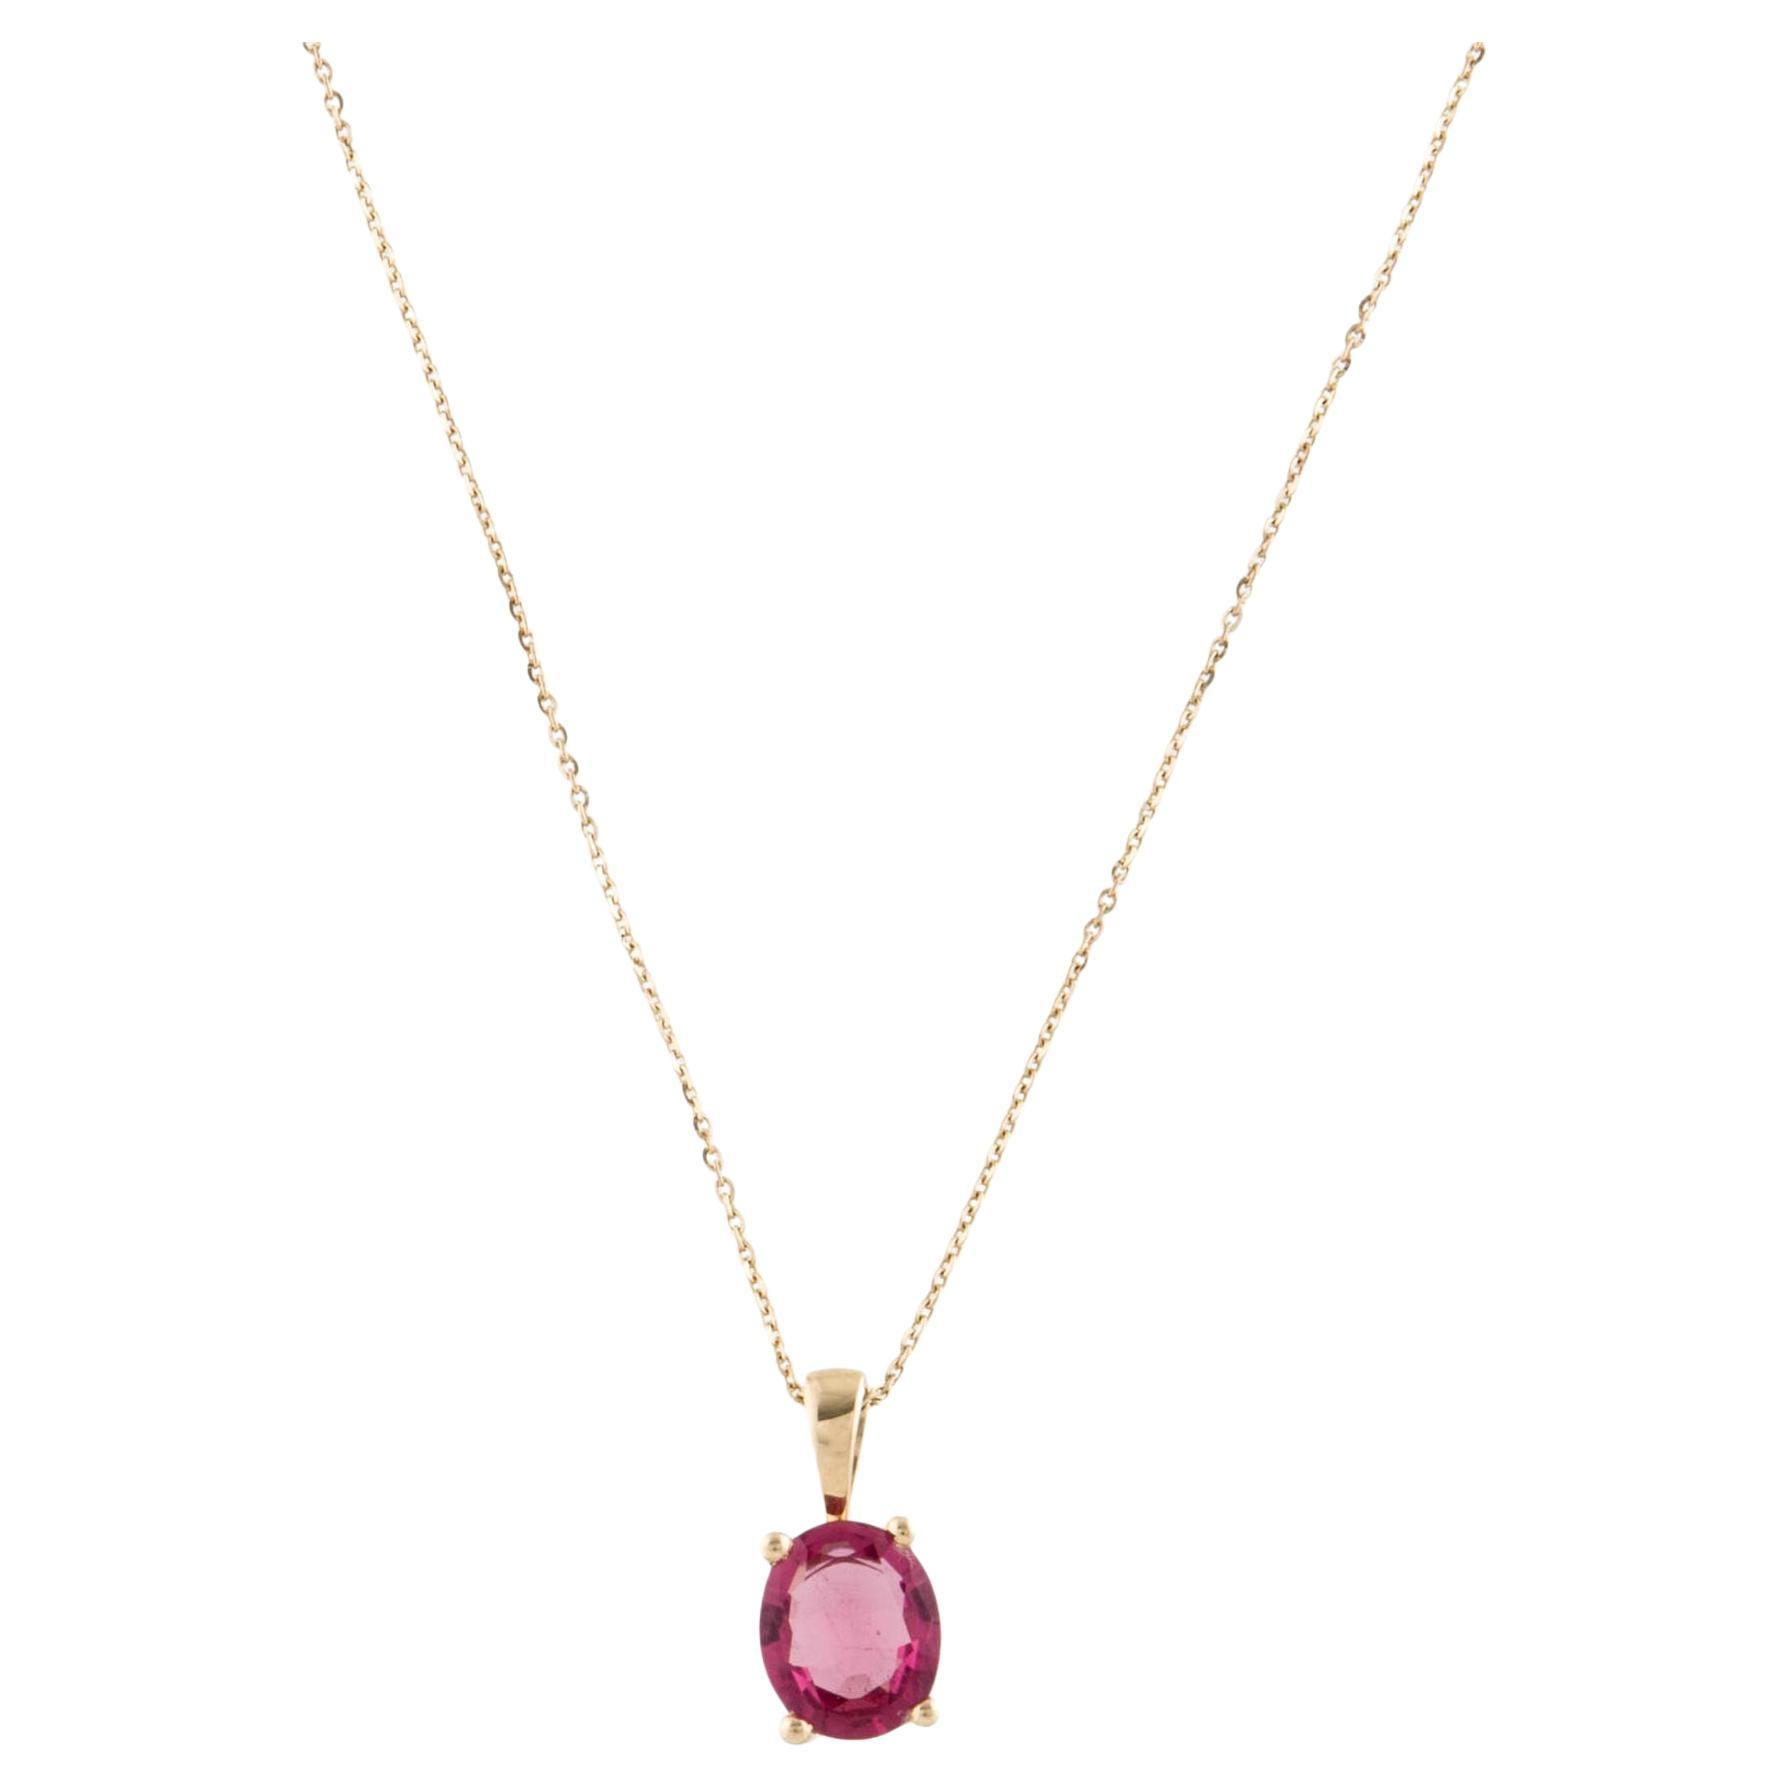 Luxury 14K Tourmaline Pendant Necklace - Stunning Gemstone Statement Jewelry